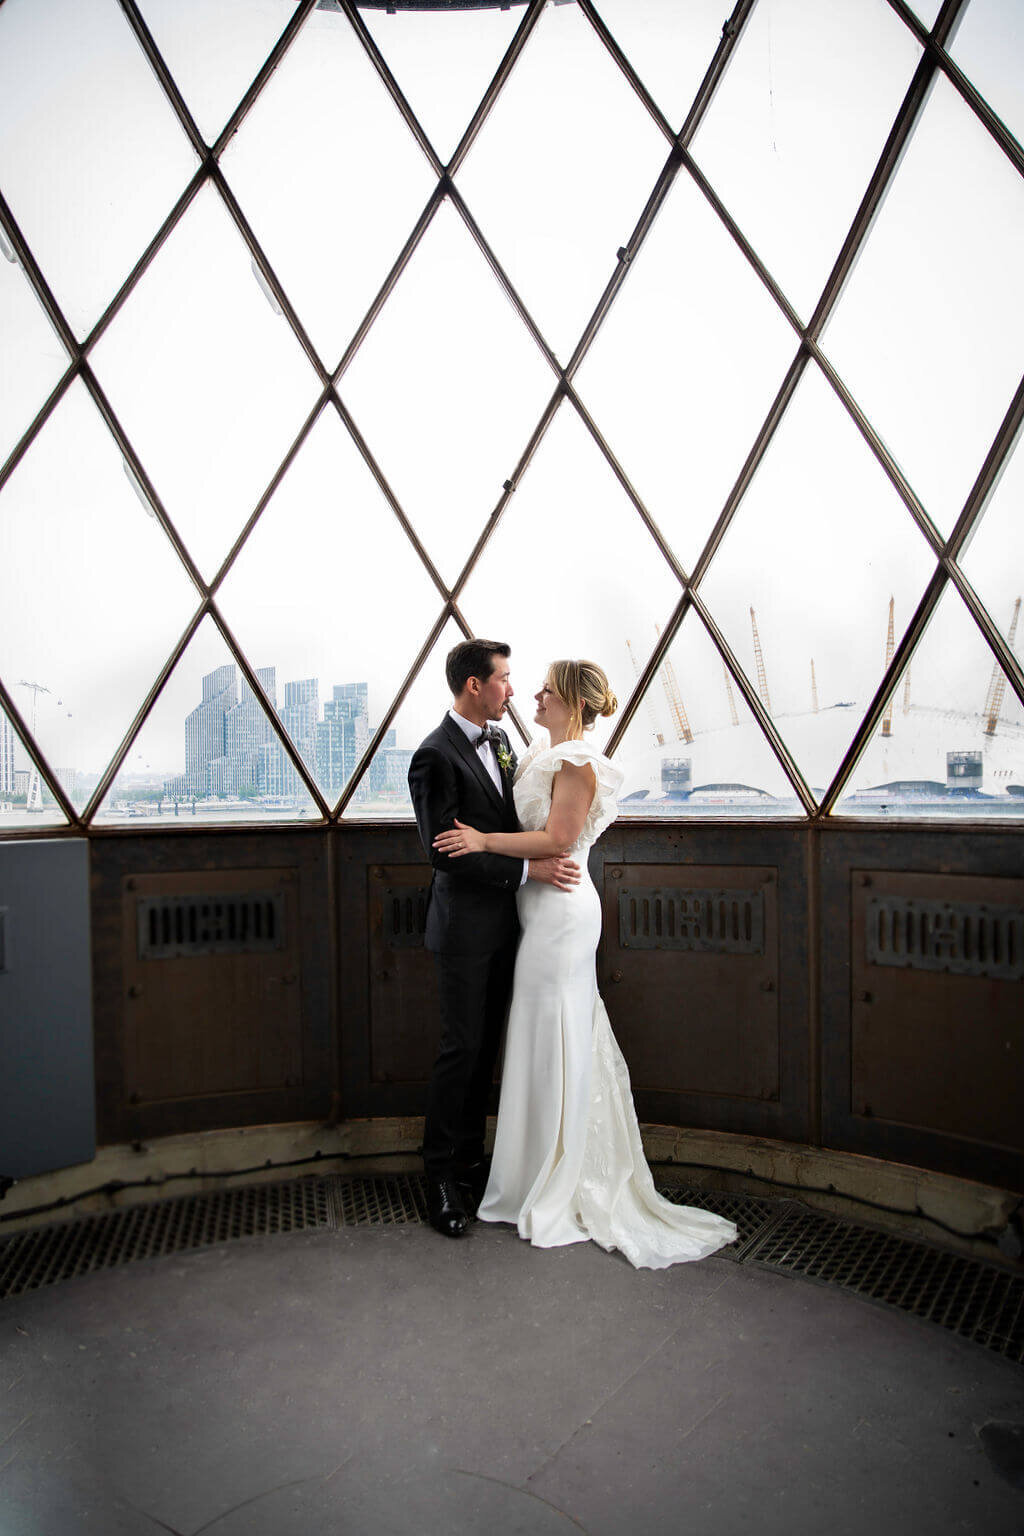 Bride and groom in Trinity Buoy Wharf lighhouse